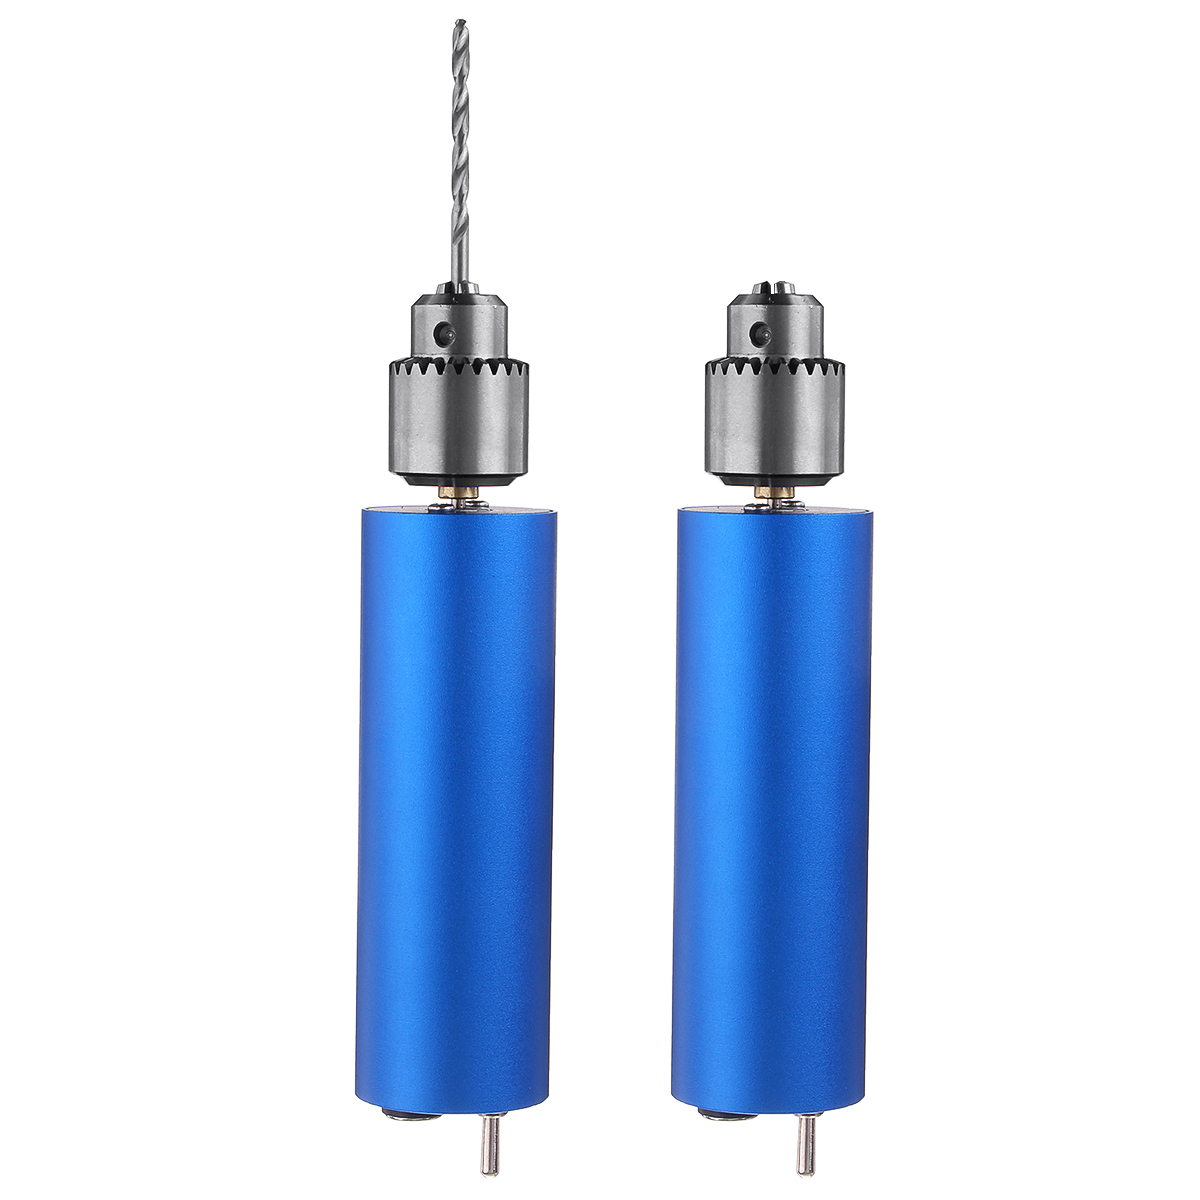 Mini-Electric-Hand-Drill-Grinding-Polishing-Tool-with-DIY-385-Ball-Bearing-Motor-Clamping-03-4mm-1760090-7